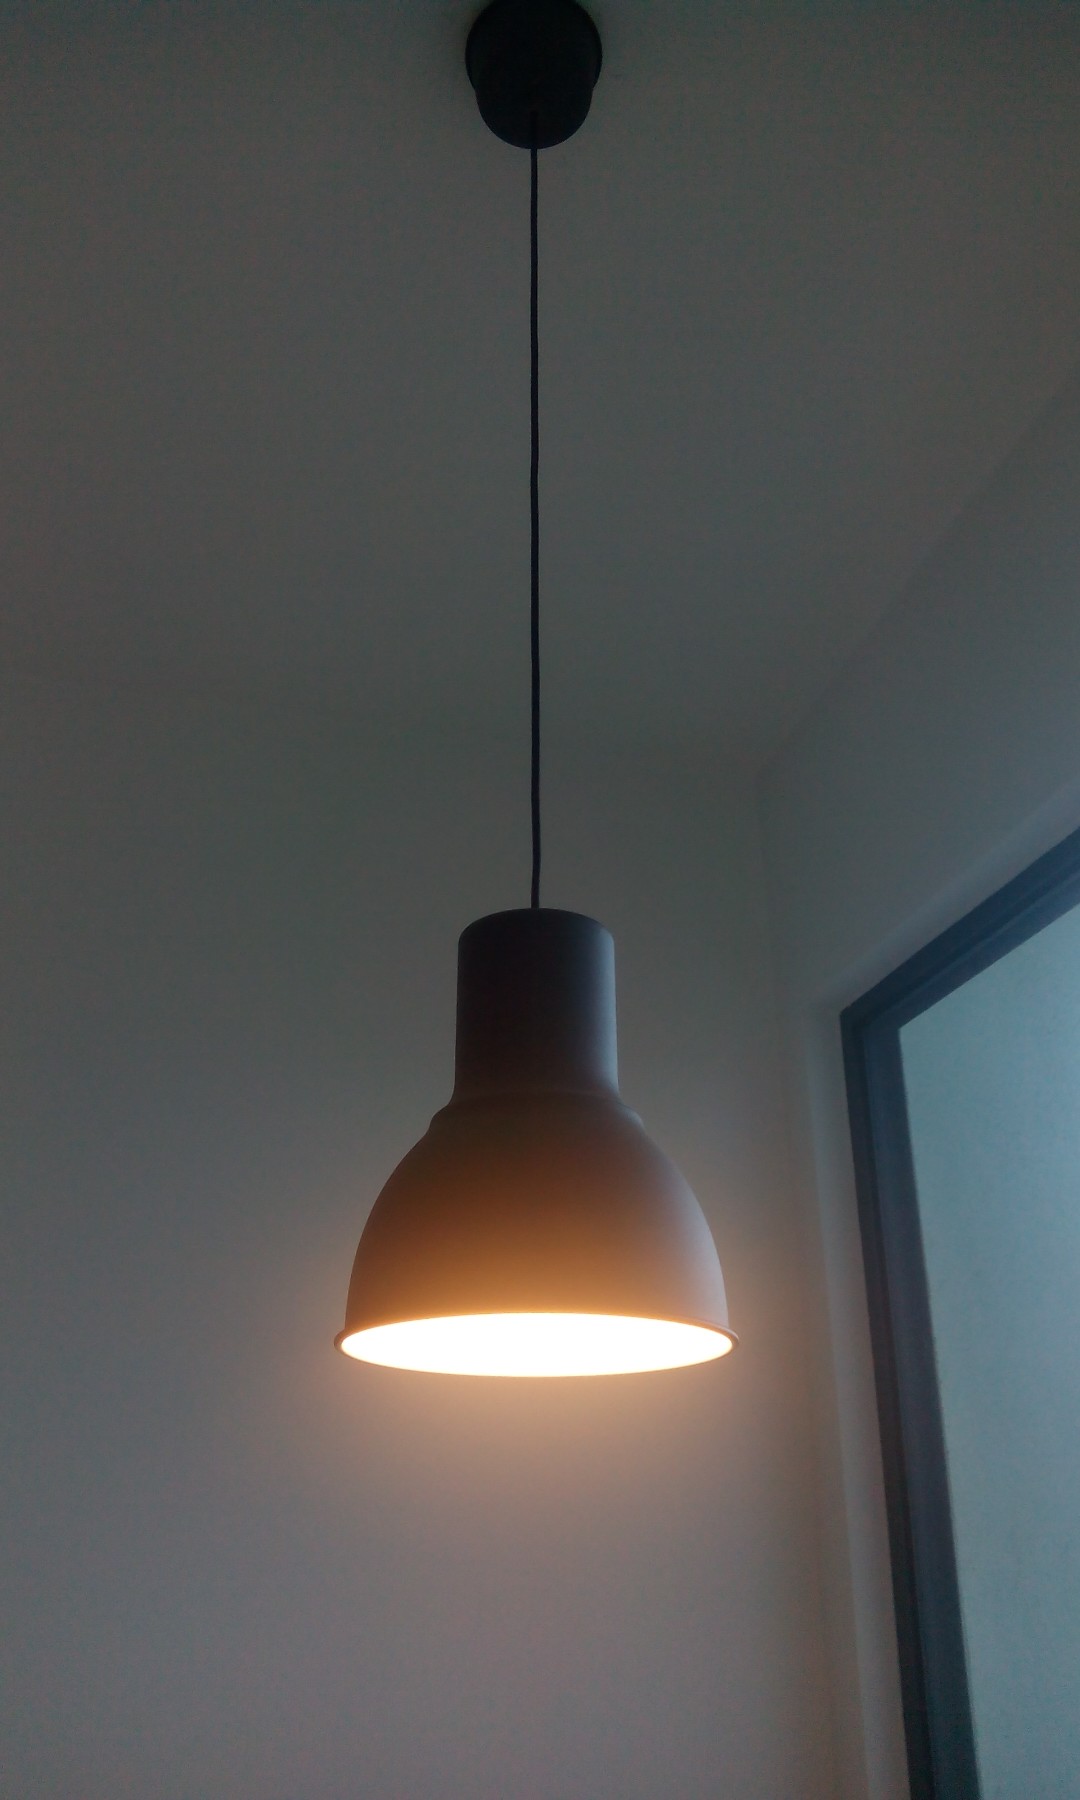  Lampu  Gantung  Ikea 